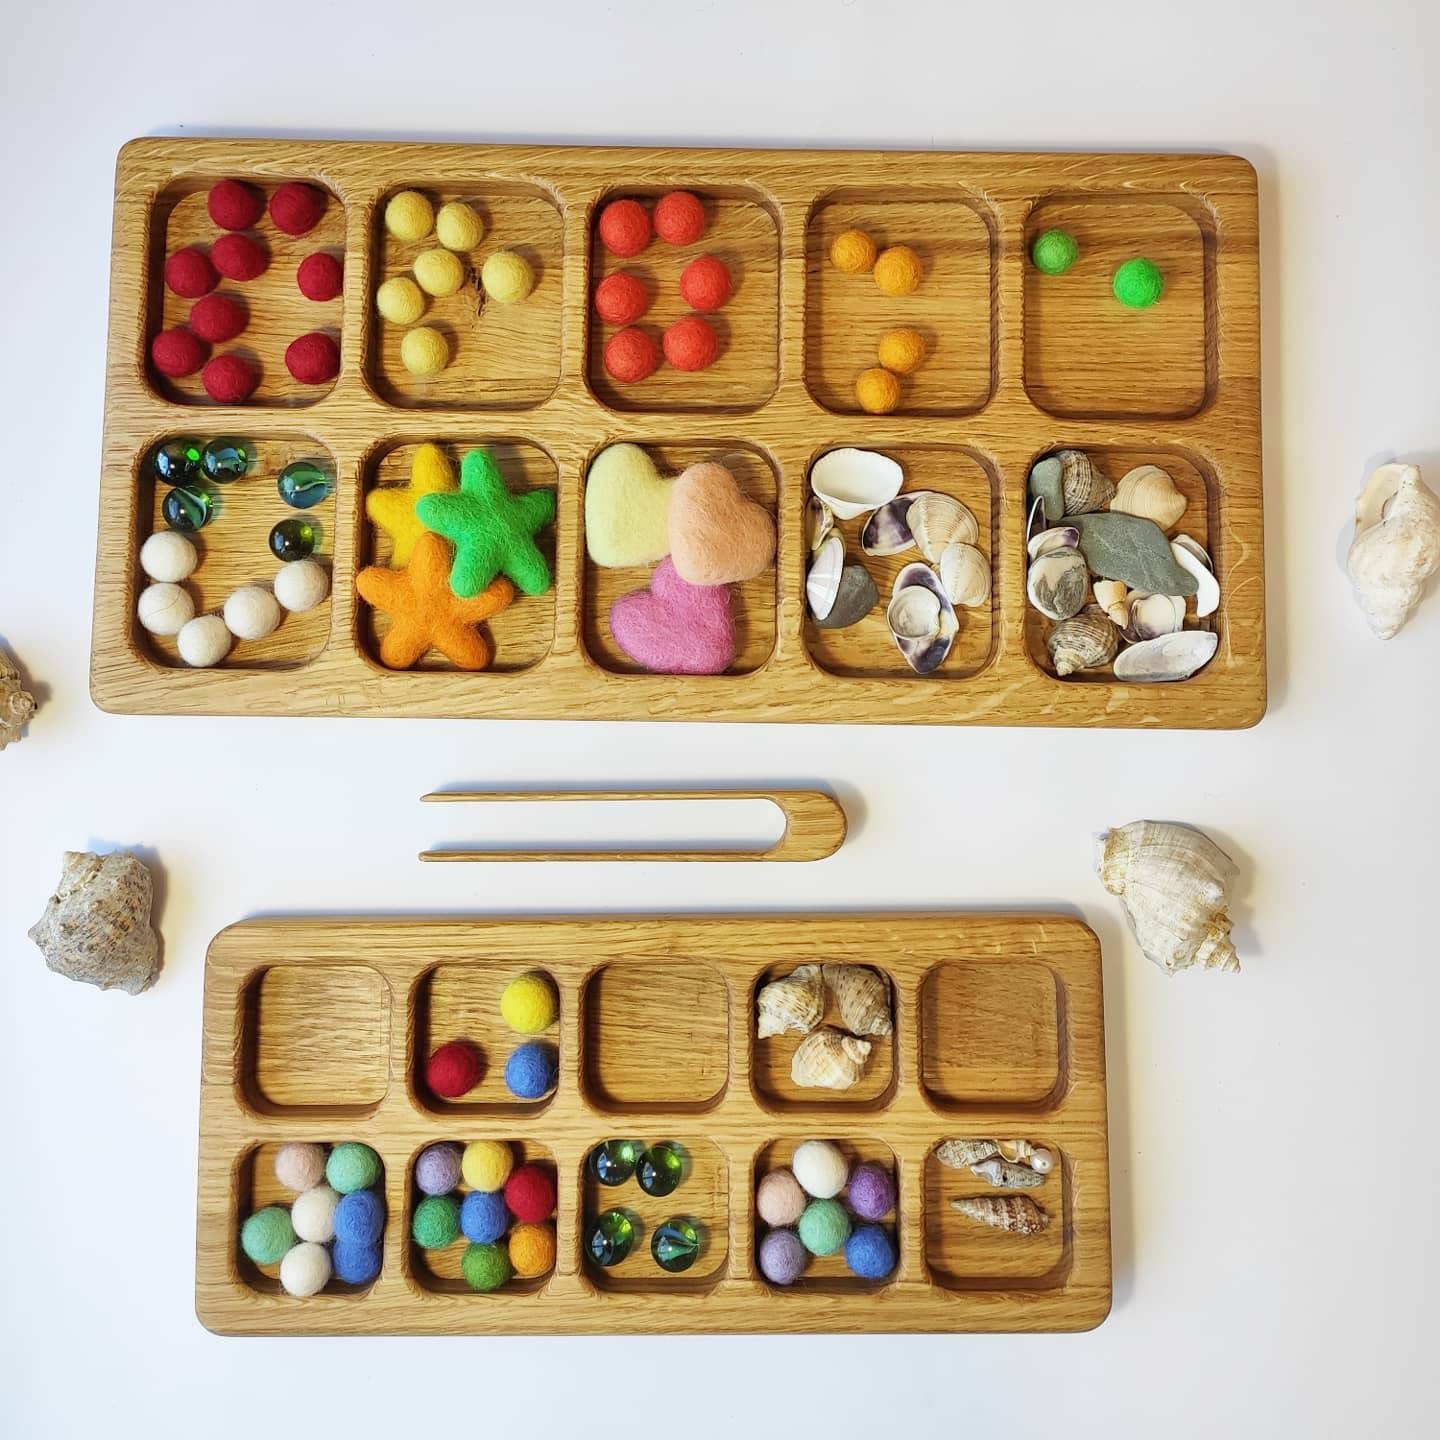 Wooden Color Sorting tray - Toddler preschool activity